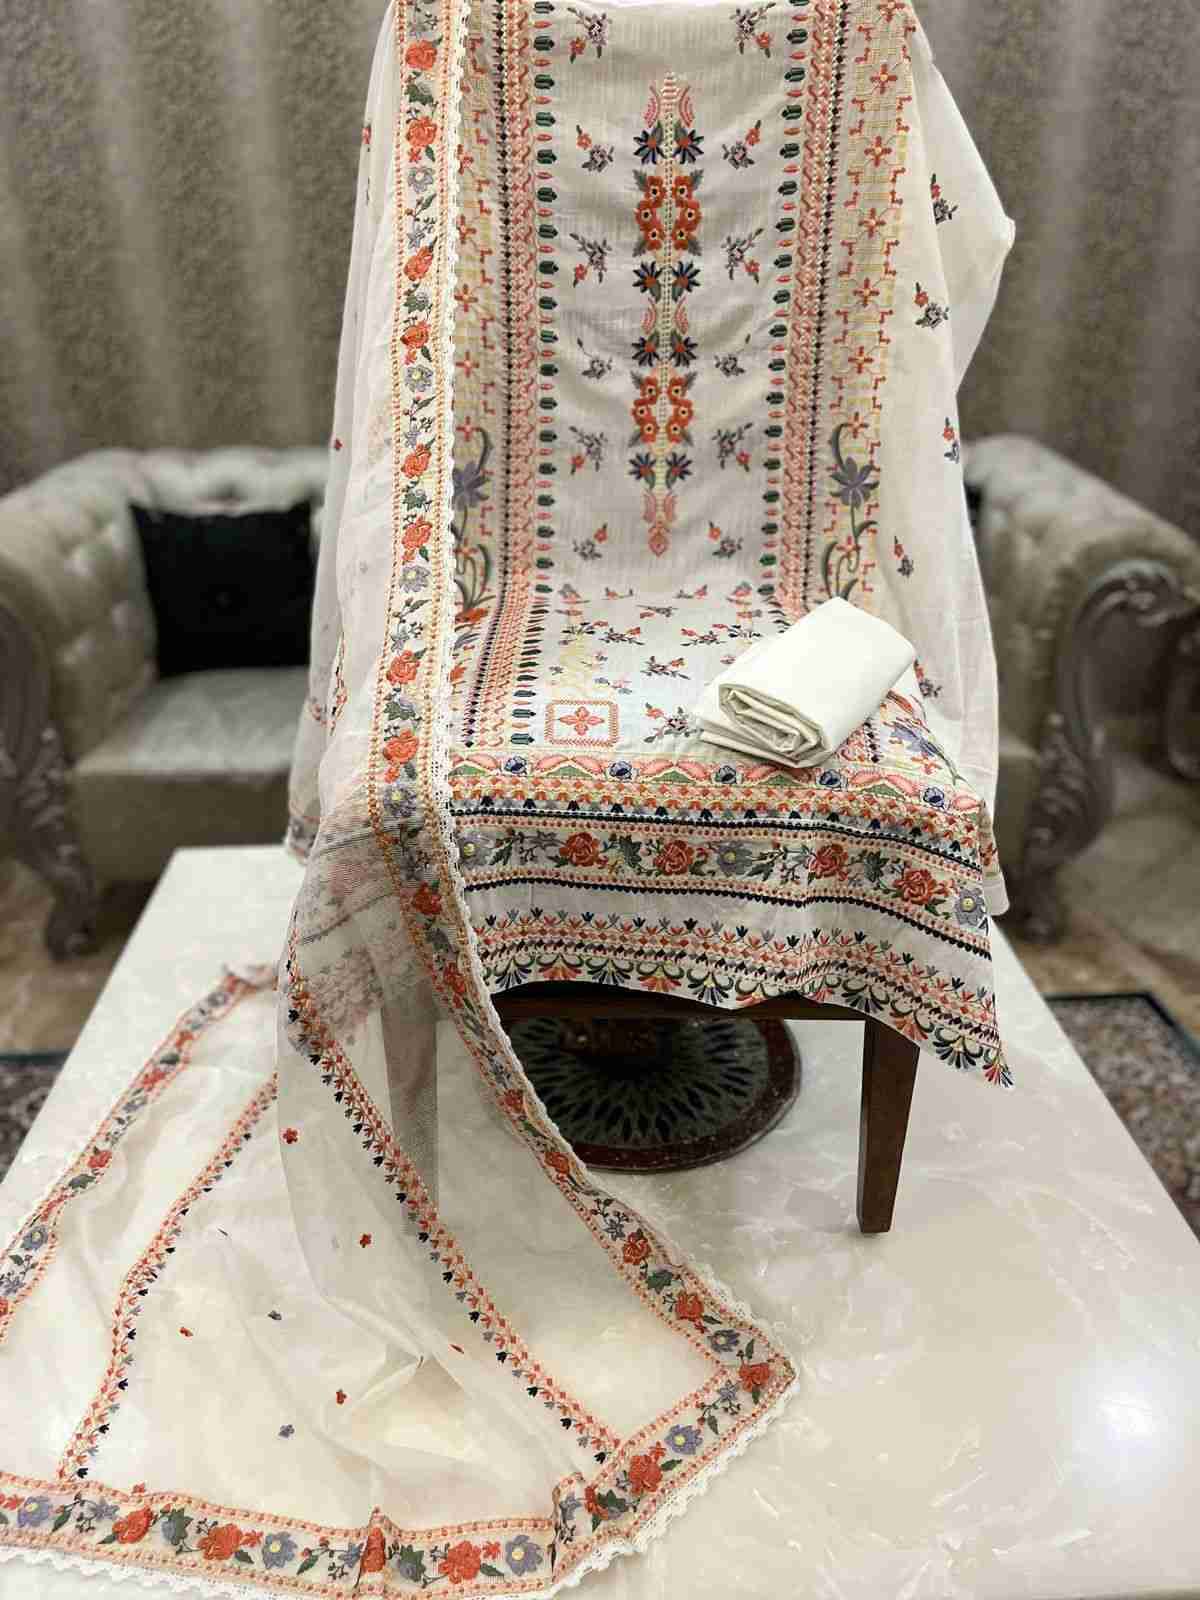 Saniya Trendz Hit Design 1004 By Saniya Trendz Beautiful Pakistani Suits Colorful Stylish Fancy Casual Wear & Ethnic Wear Cotton Embroidered Dresses At Wholesale Price